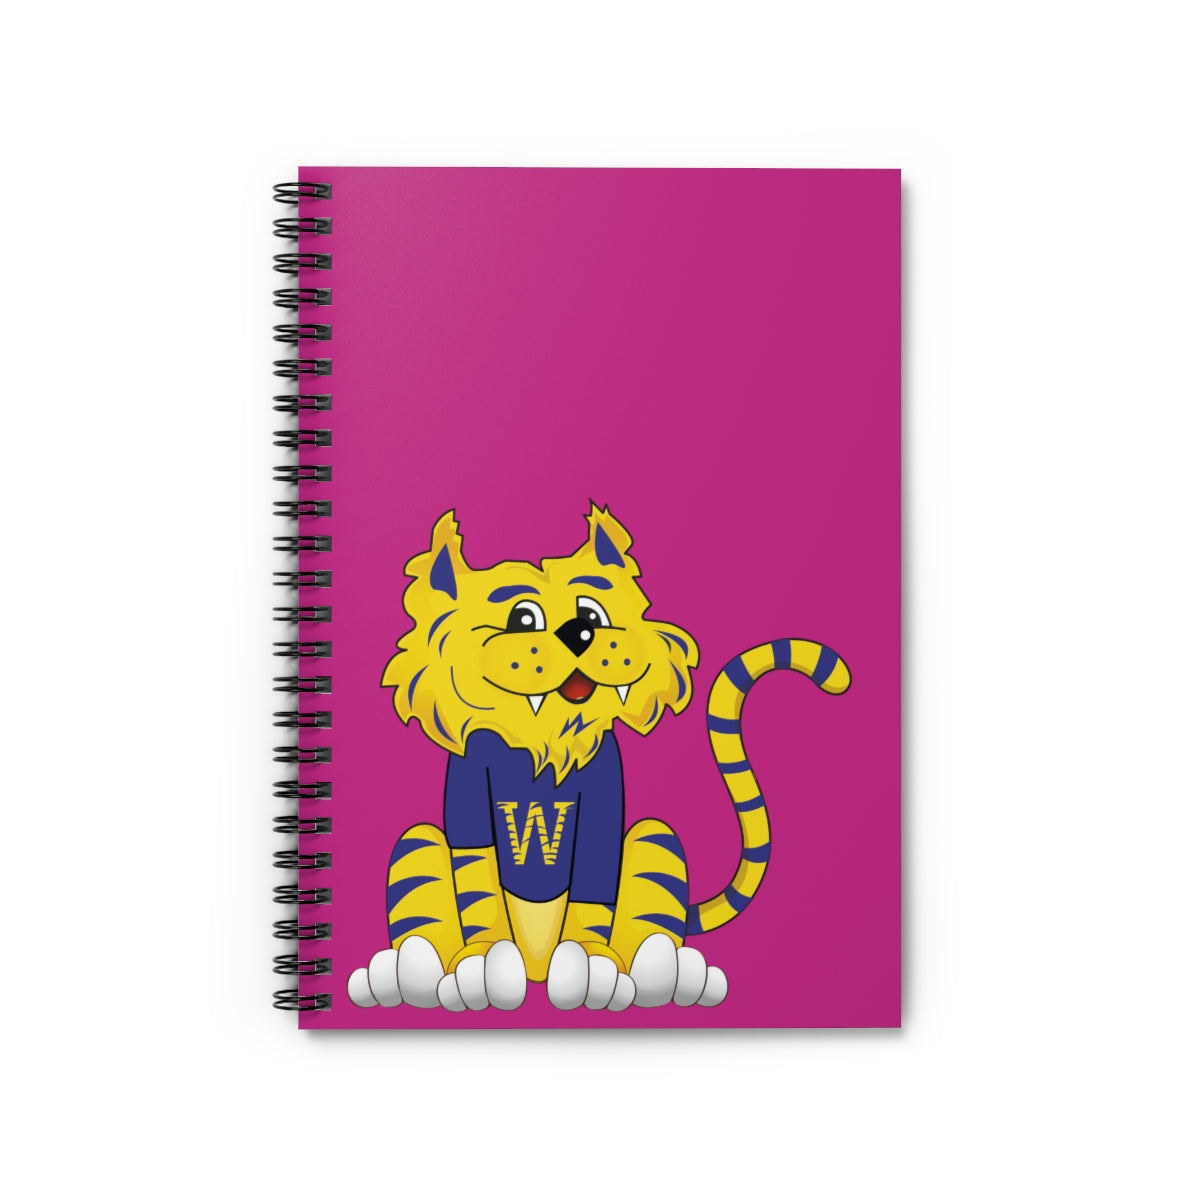 Pink Spiral Notebook - Ruled Line